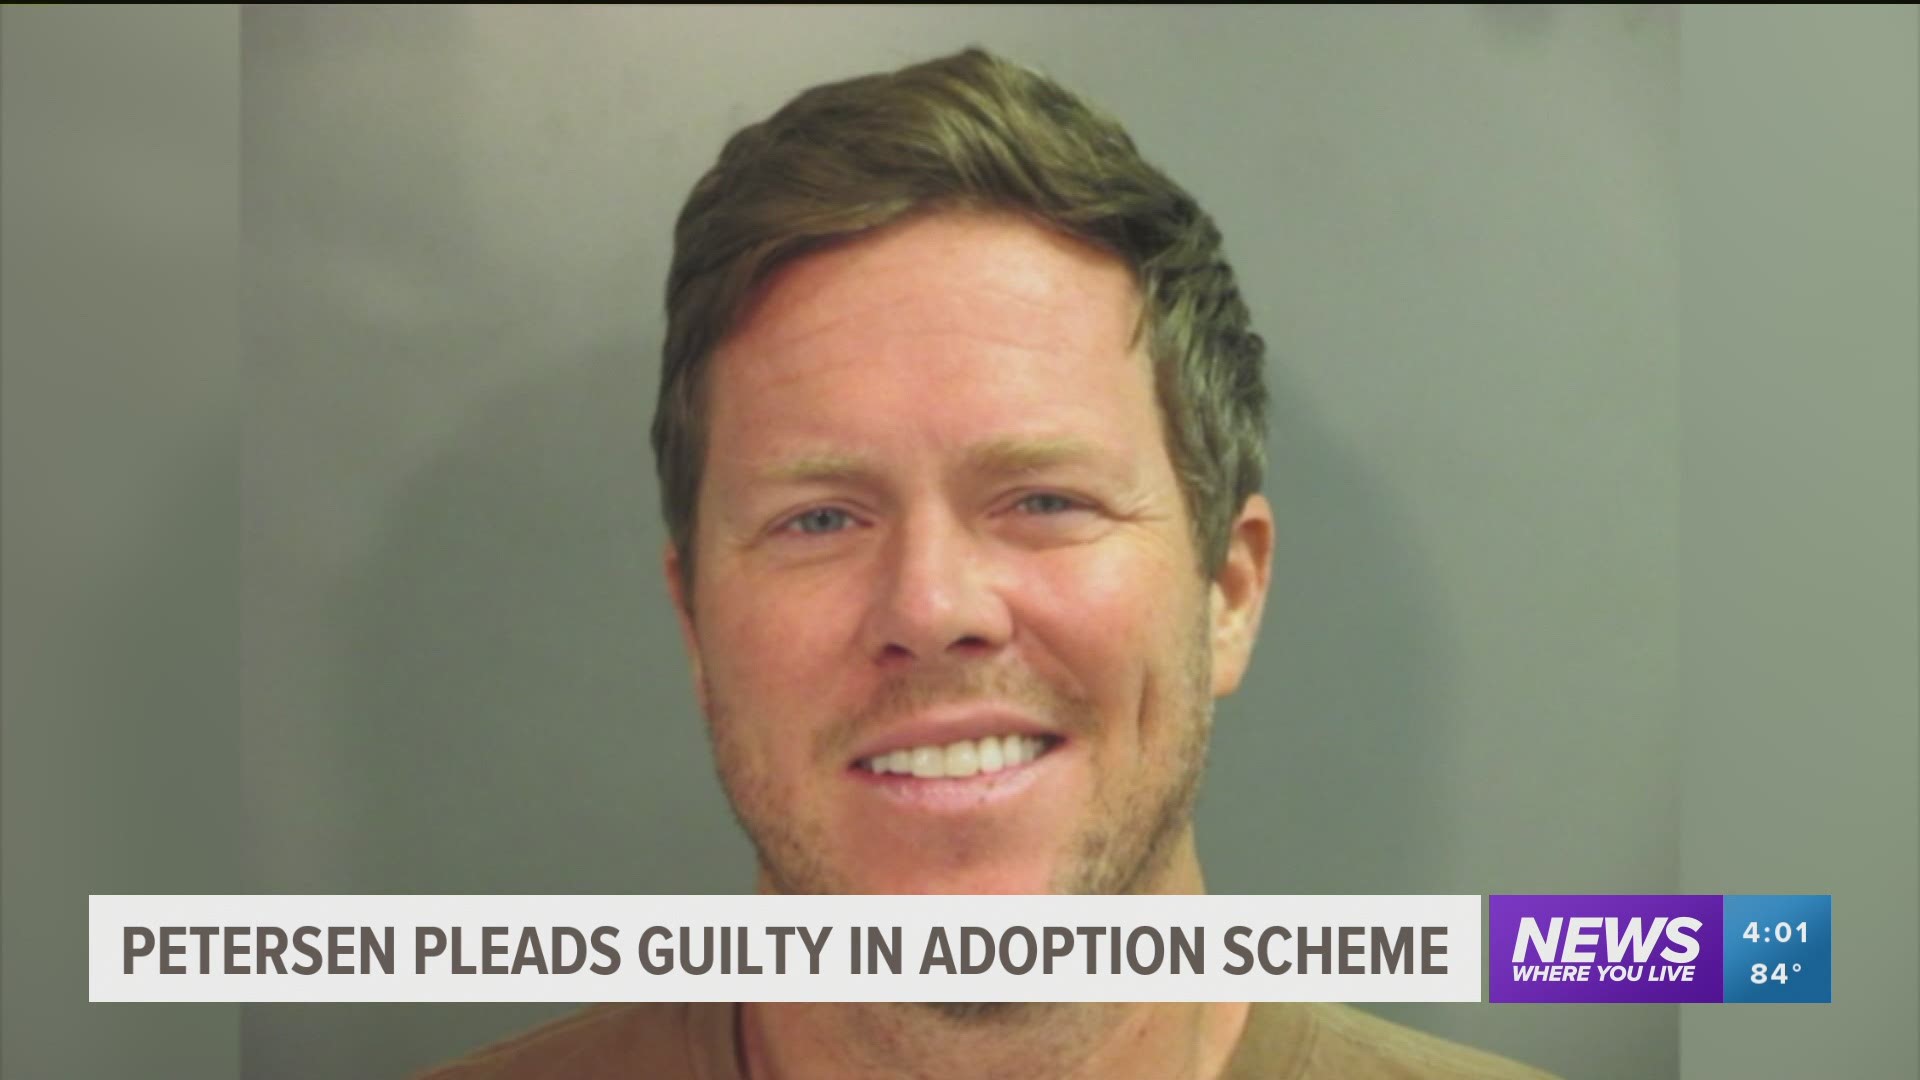 Paul Petersen pleads guilty in adoption scheme